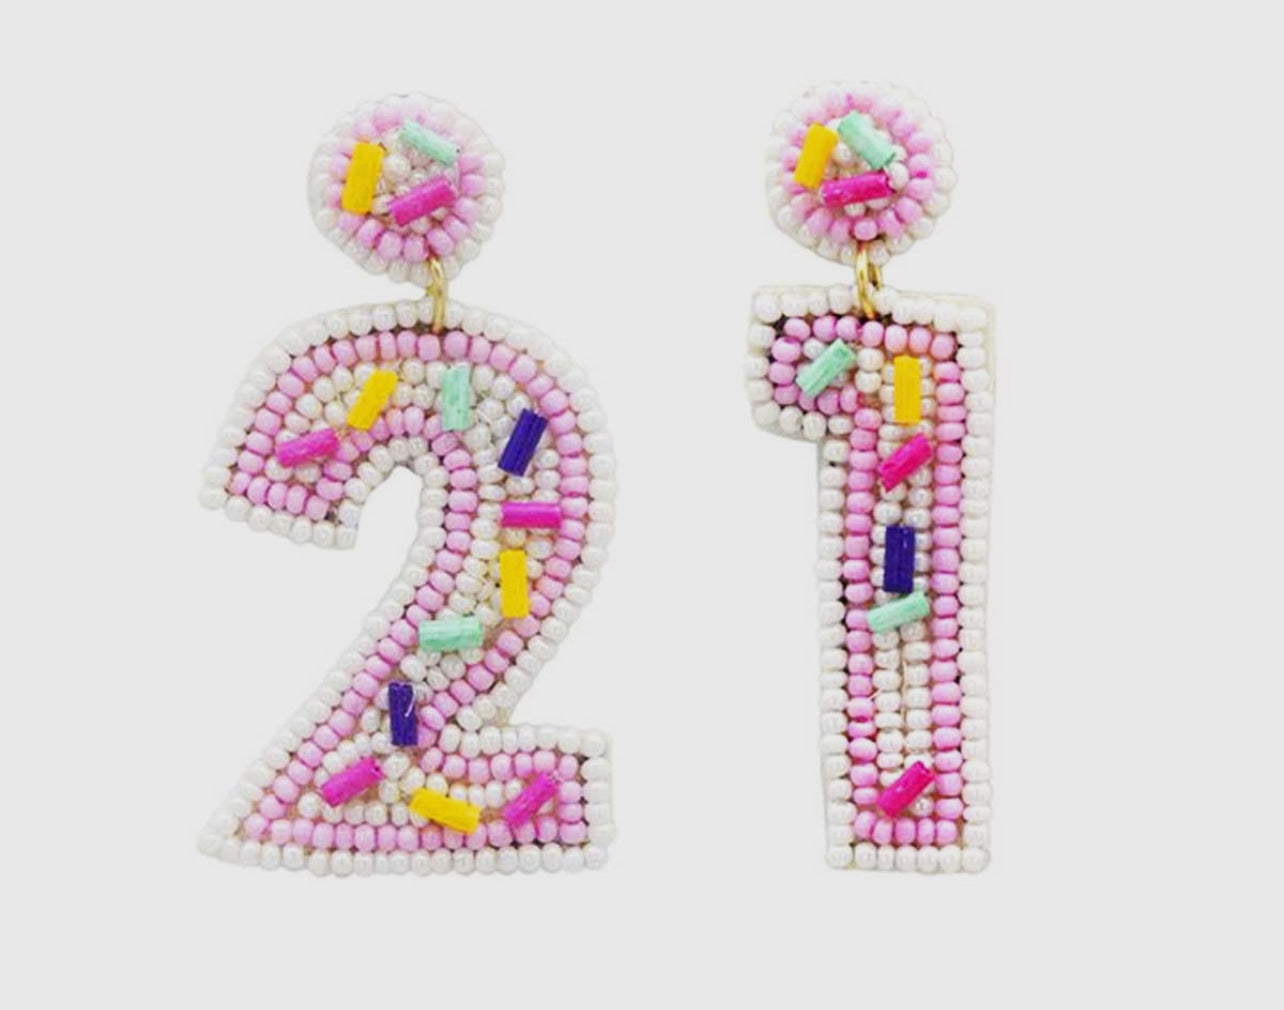 21st Birthday Queen Earrings